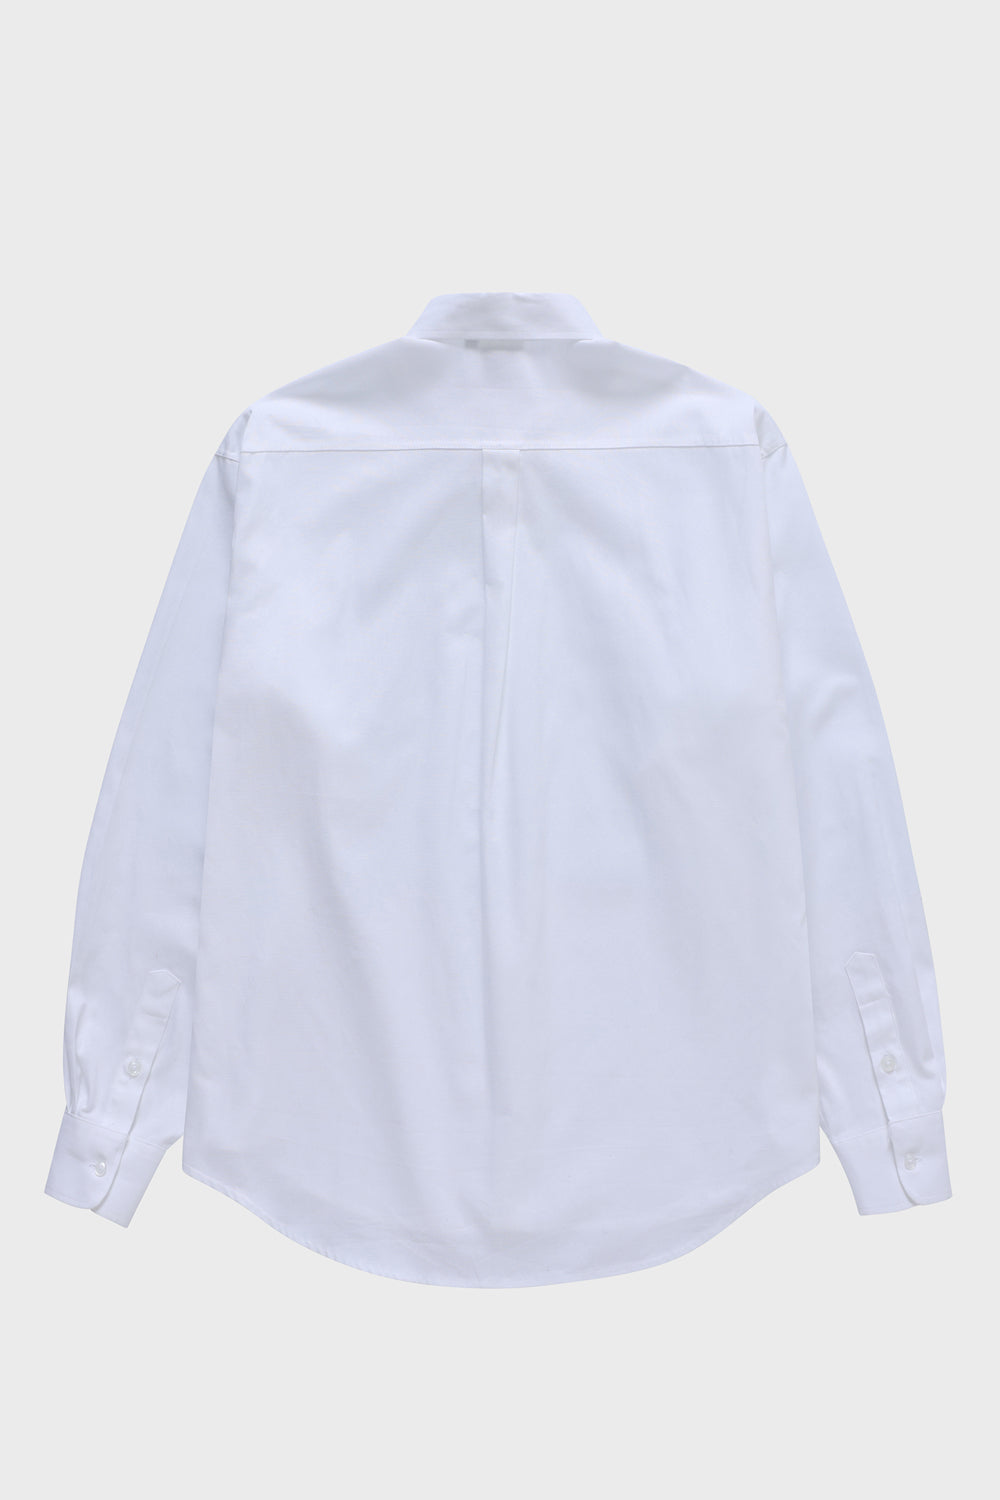 Cワッペン ロングスリーブ オックスフォードシャツ・ホワイト［ユニセックス］ / C Patch Unisex White Oxford Shirt